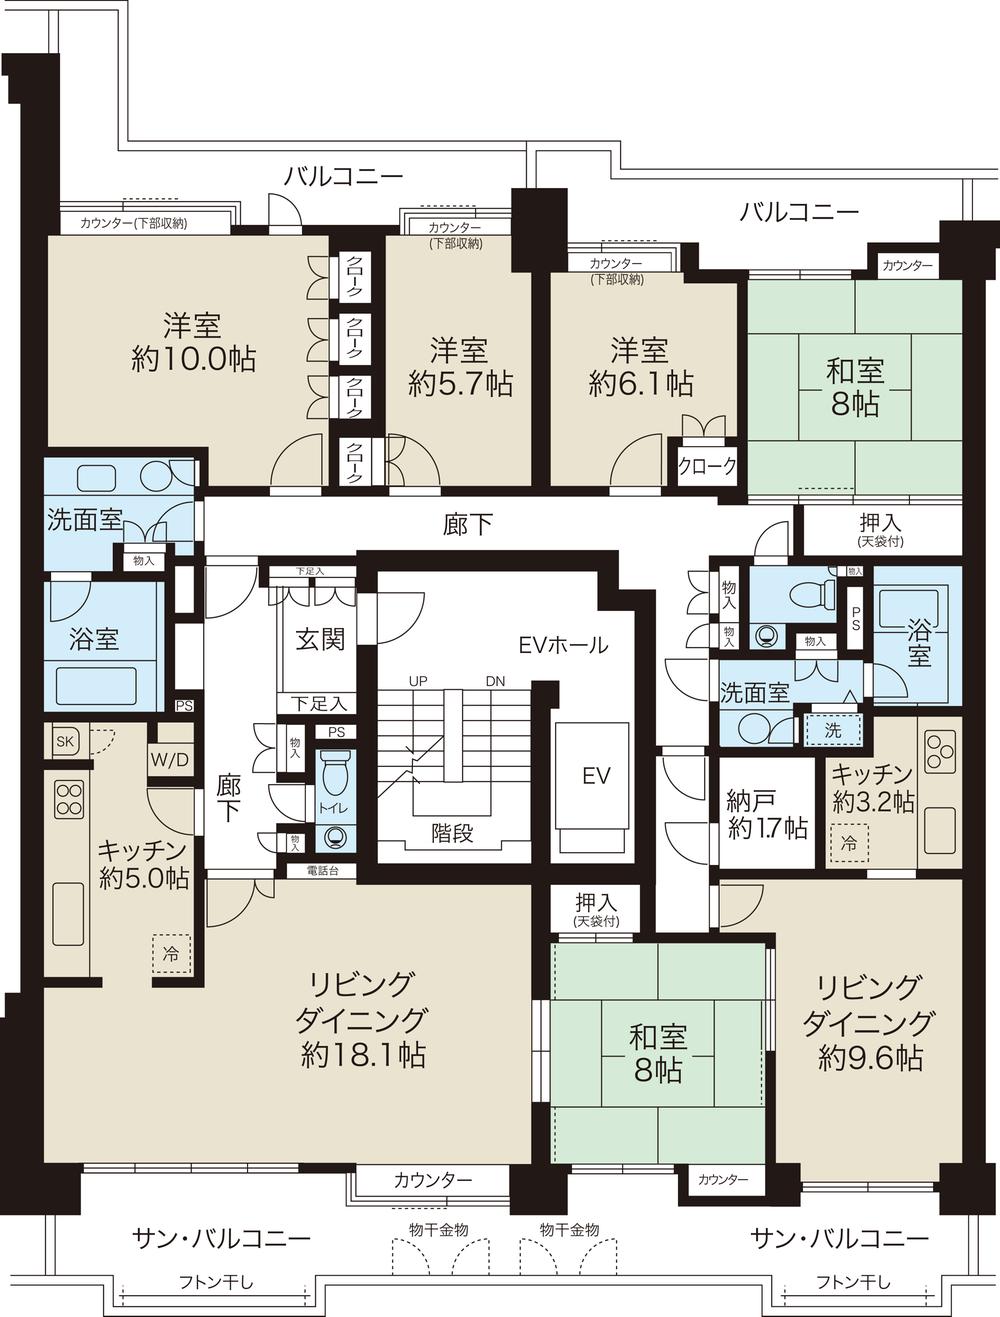 Floor plan. 5LLDDKK + S (storeroom), Price 49,800,000 yen, Footprint 187.77 sq m , Balcony area 45.75 sq m